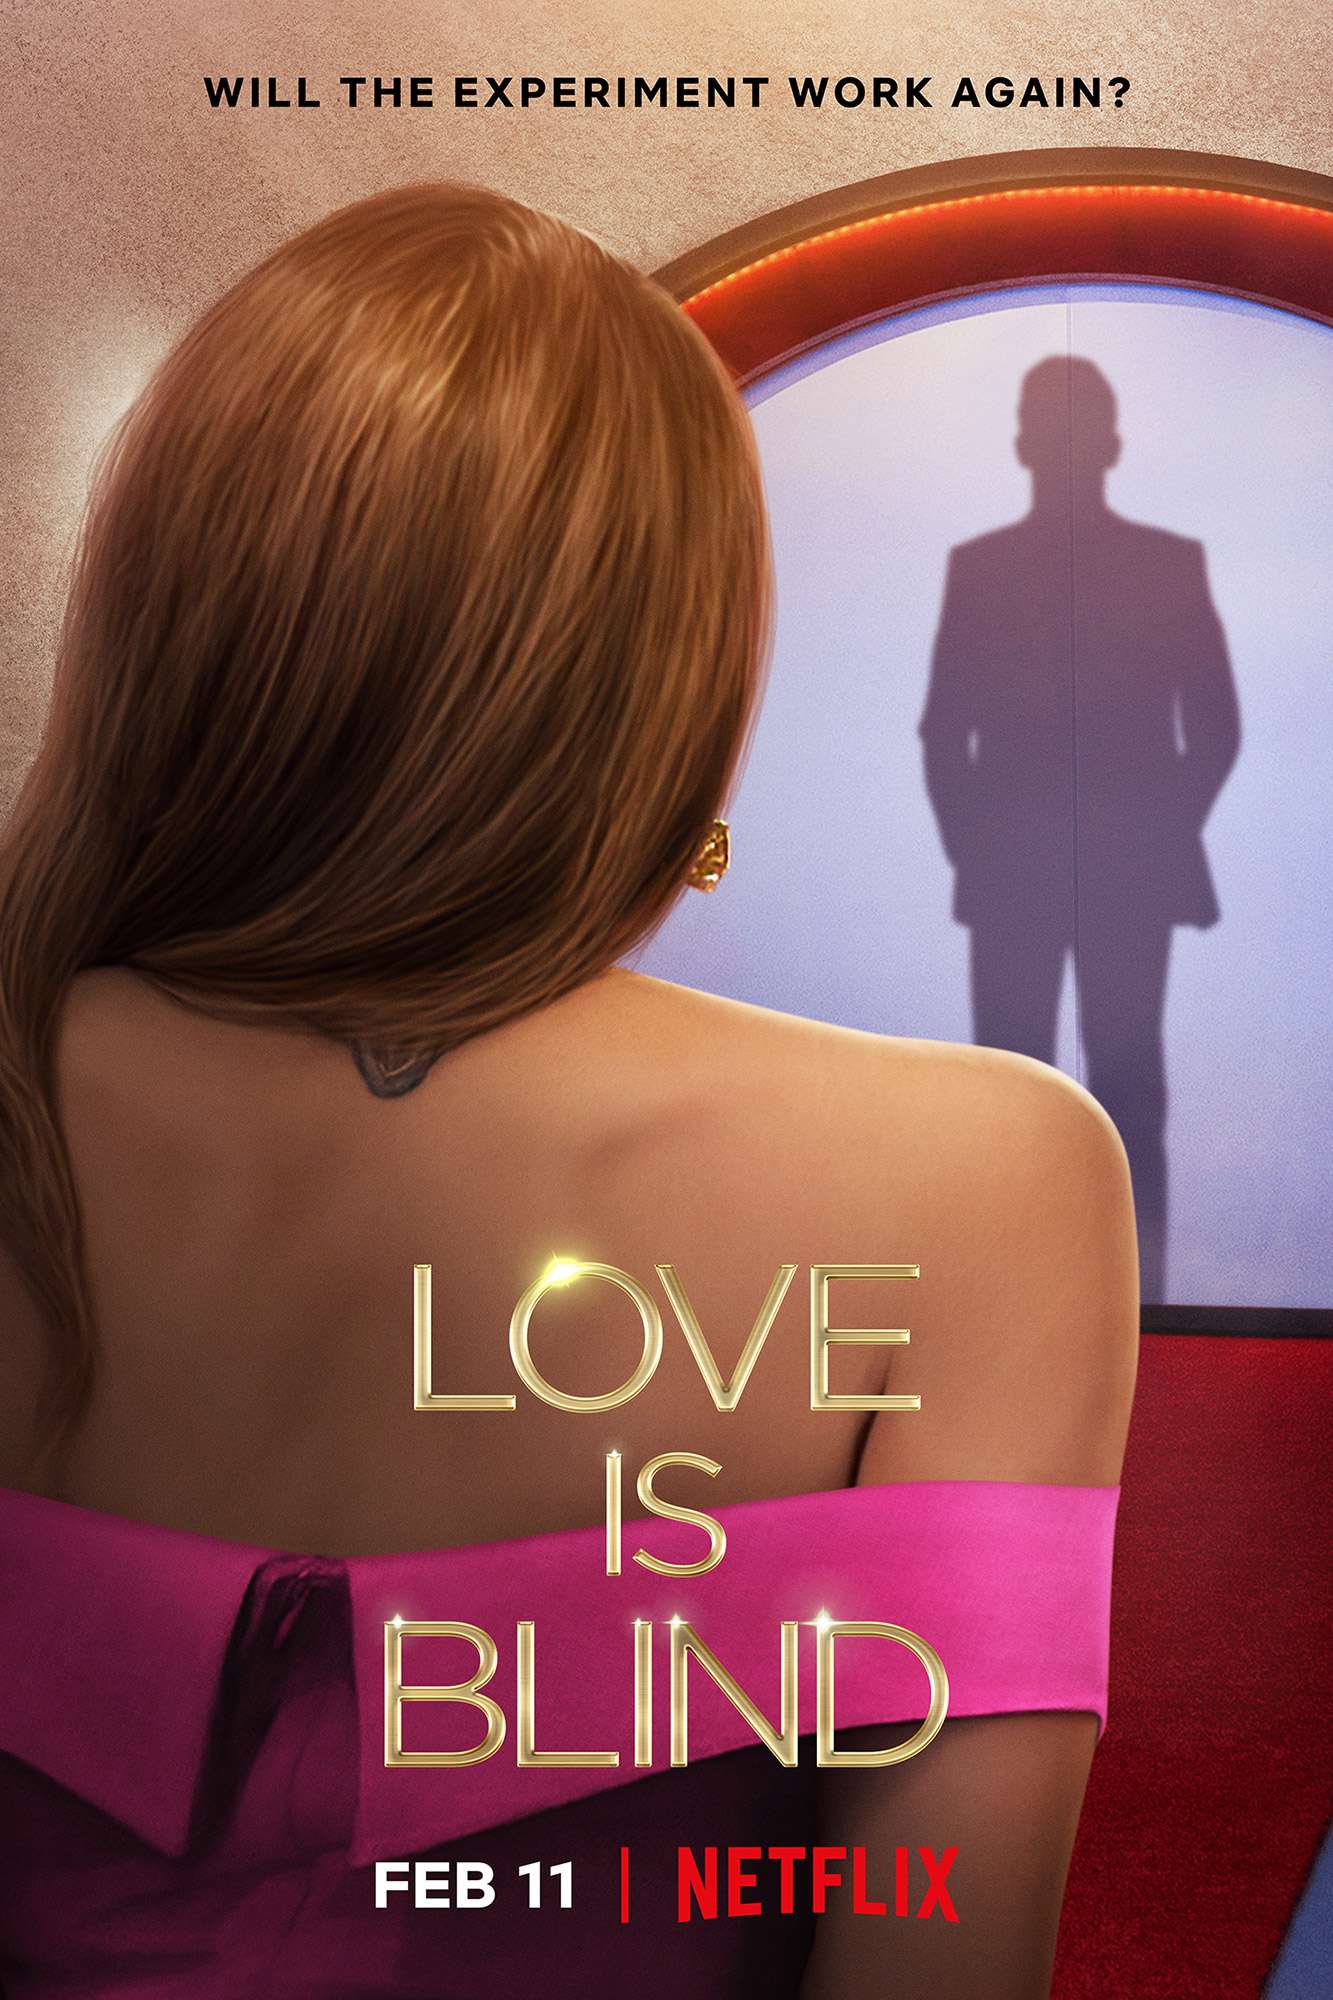 Is “Love Is Blind Season 2” on Netflix